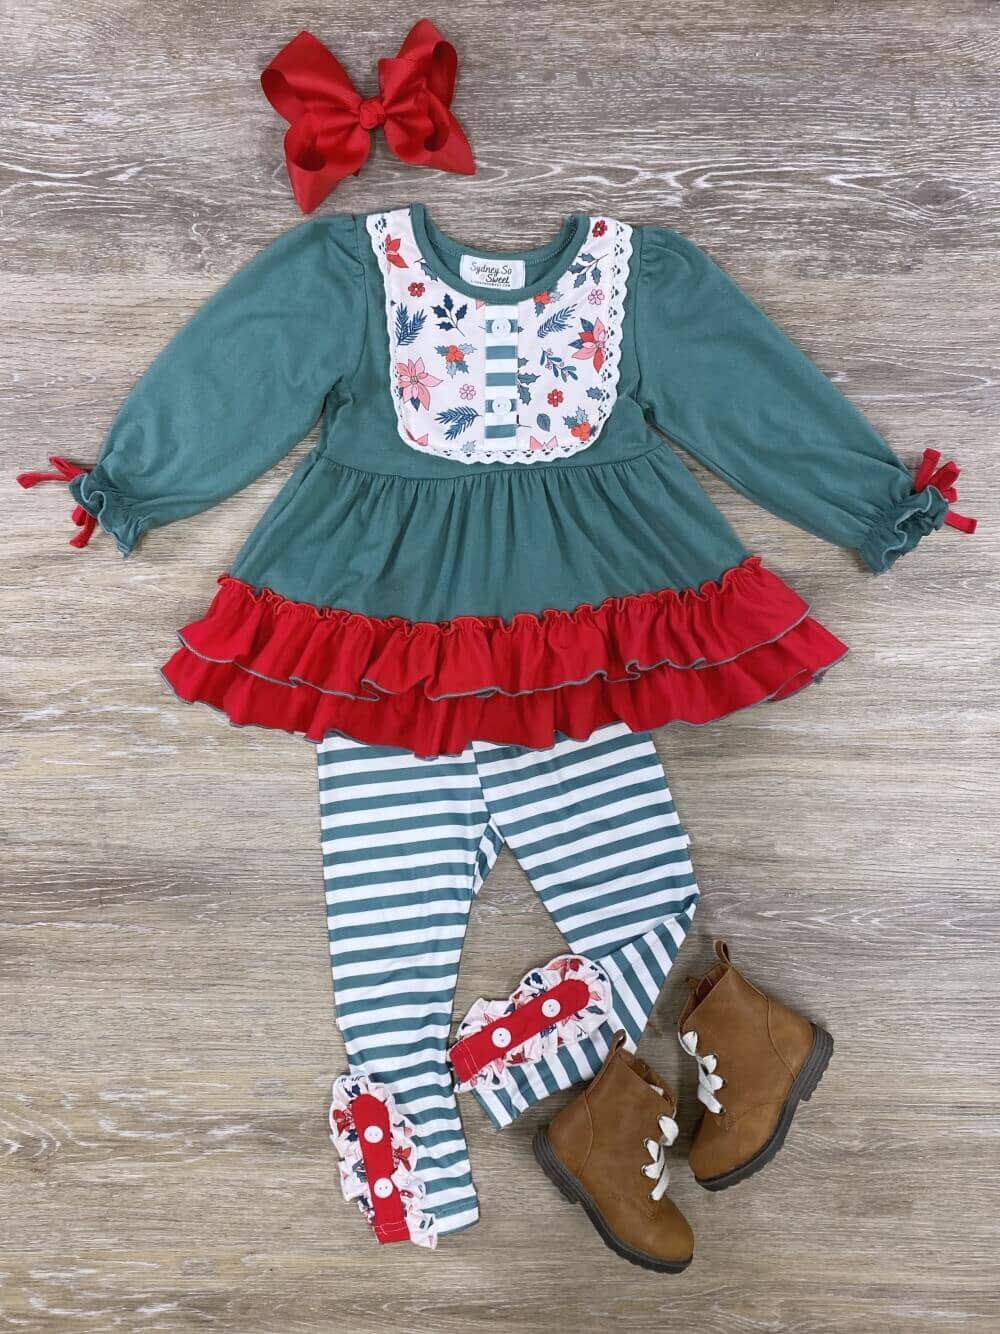 Baby Girl Christmas Dress, Matching Christmas Outfits for Siblings, Zuli  Kids 294008 - Zuli Kids Clothing